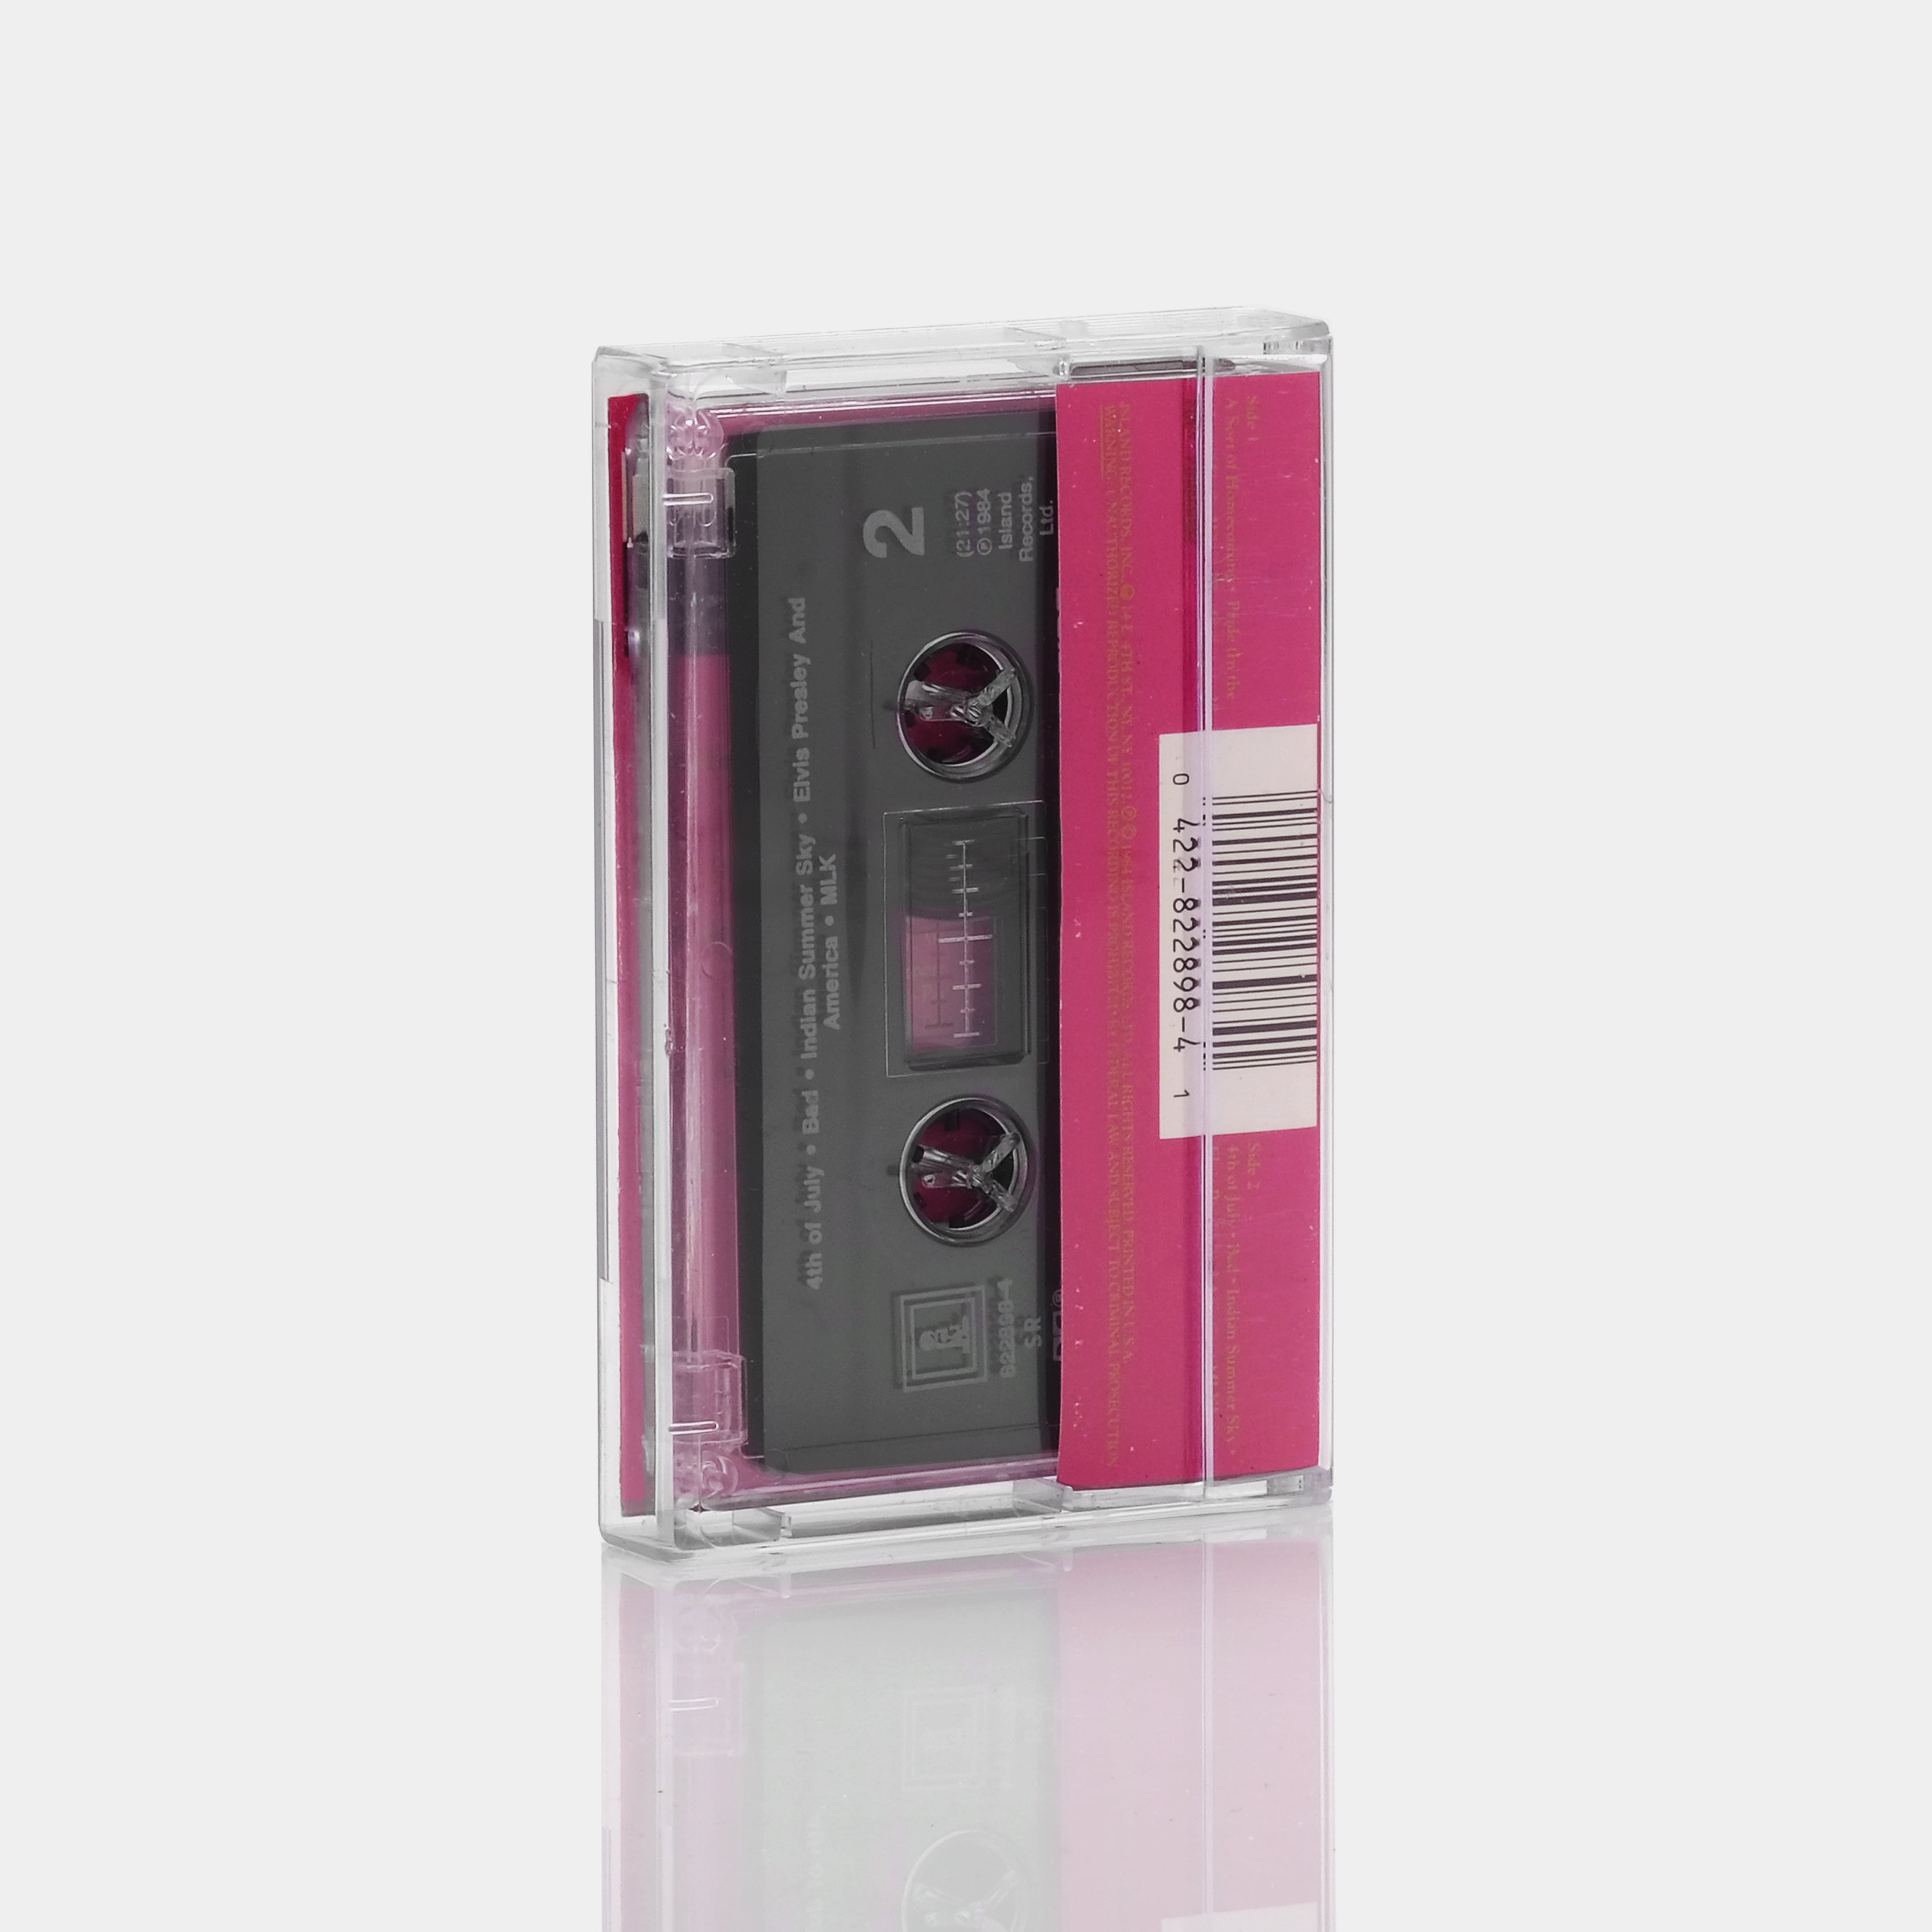 U2 - The Unforgettable Fire Cassette Tape